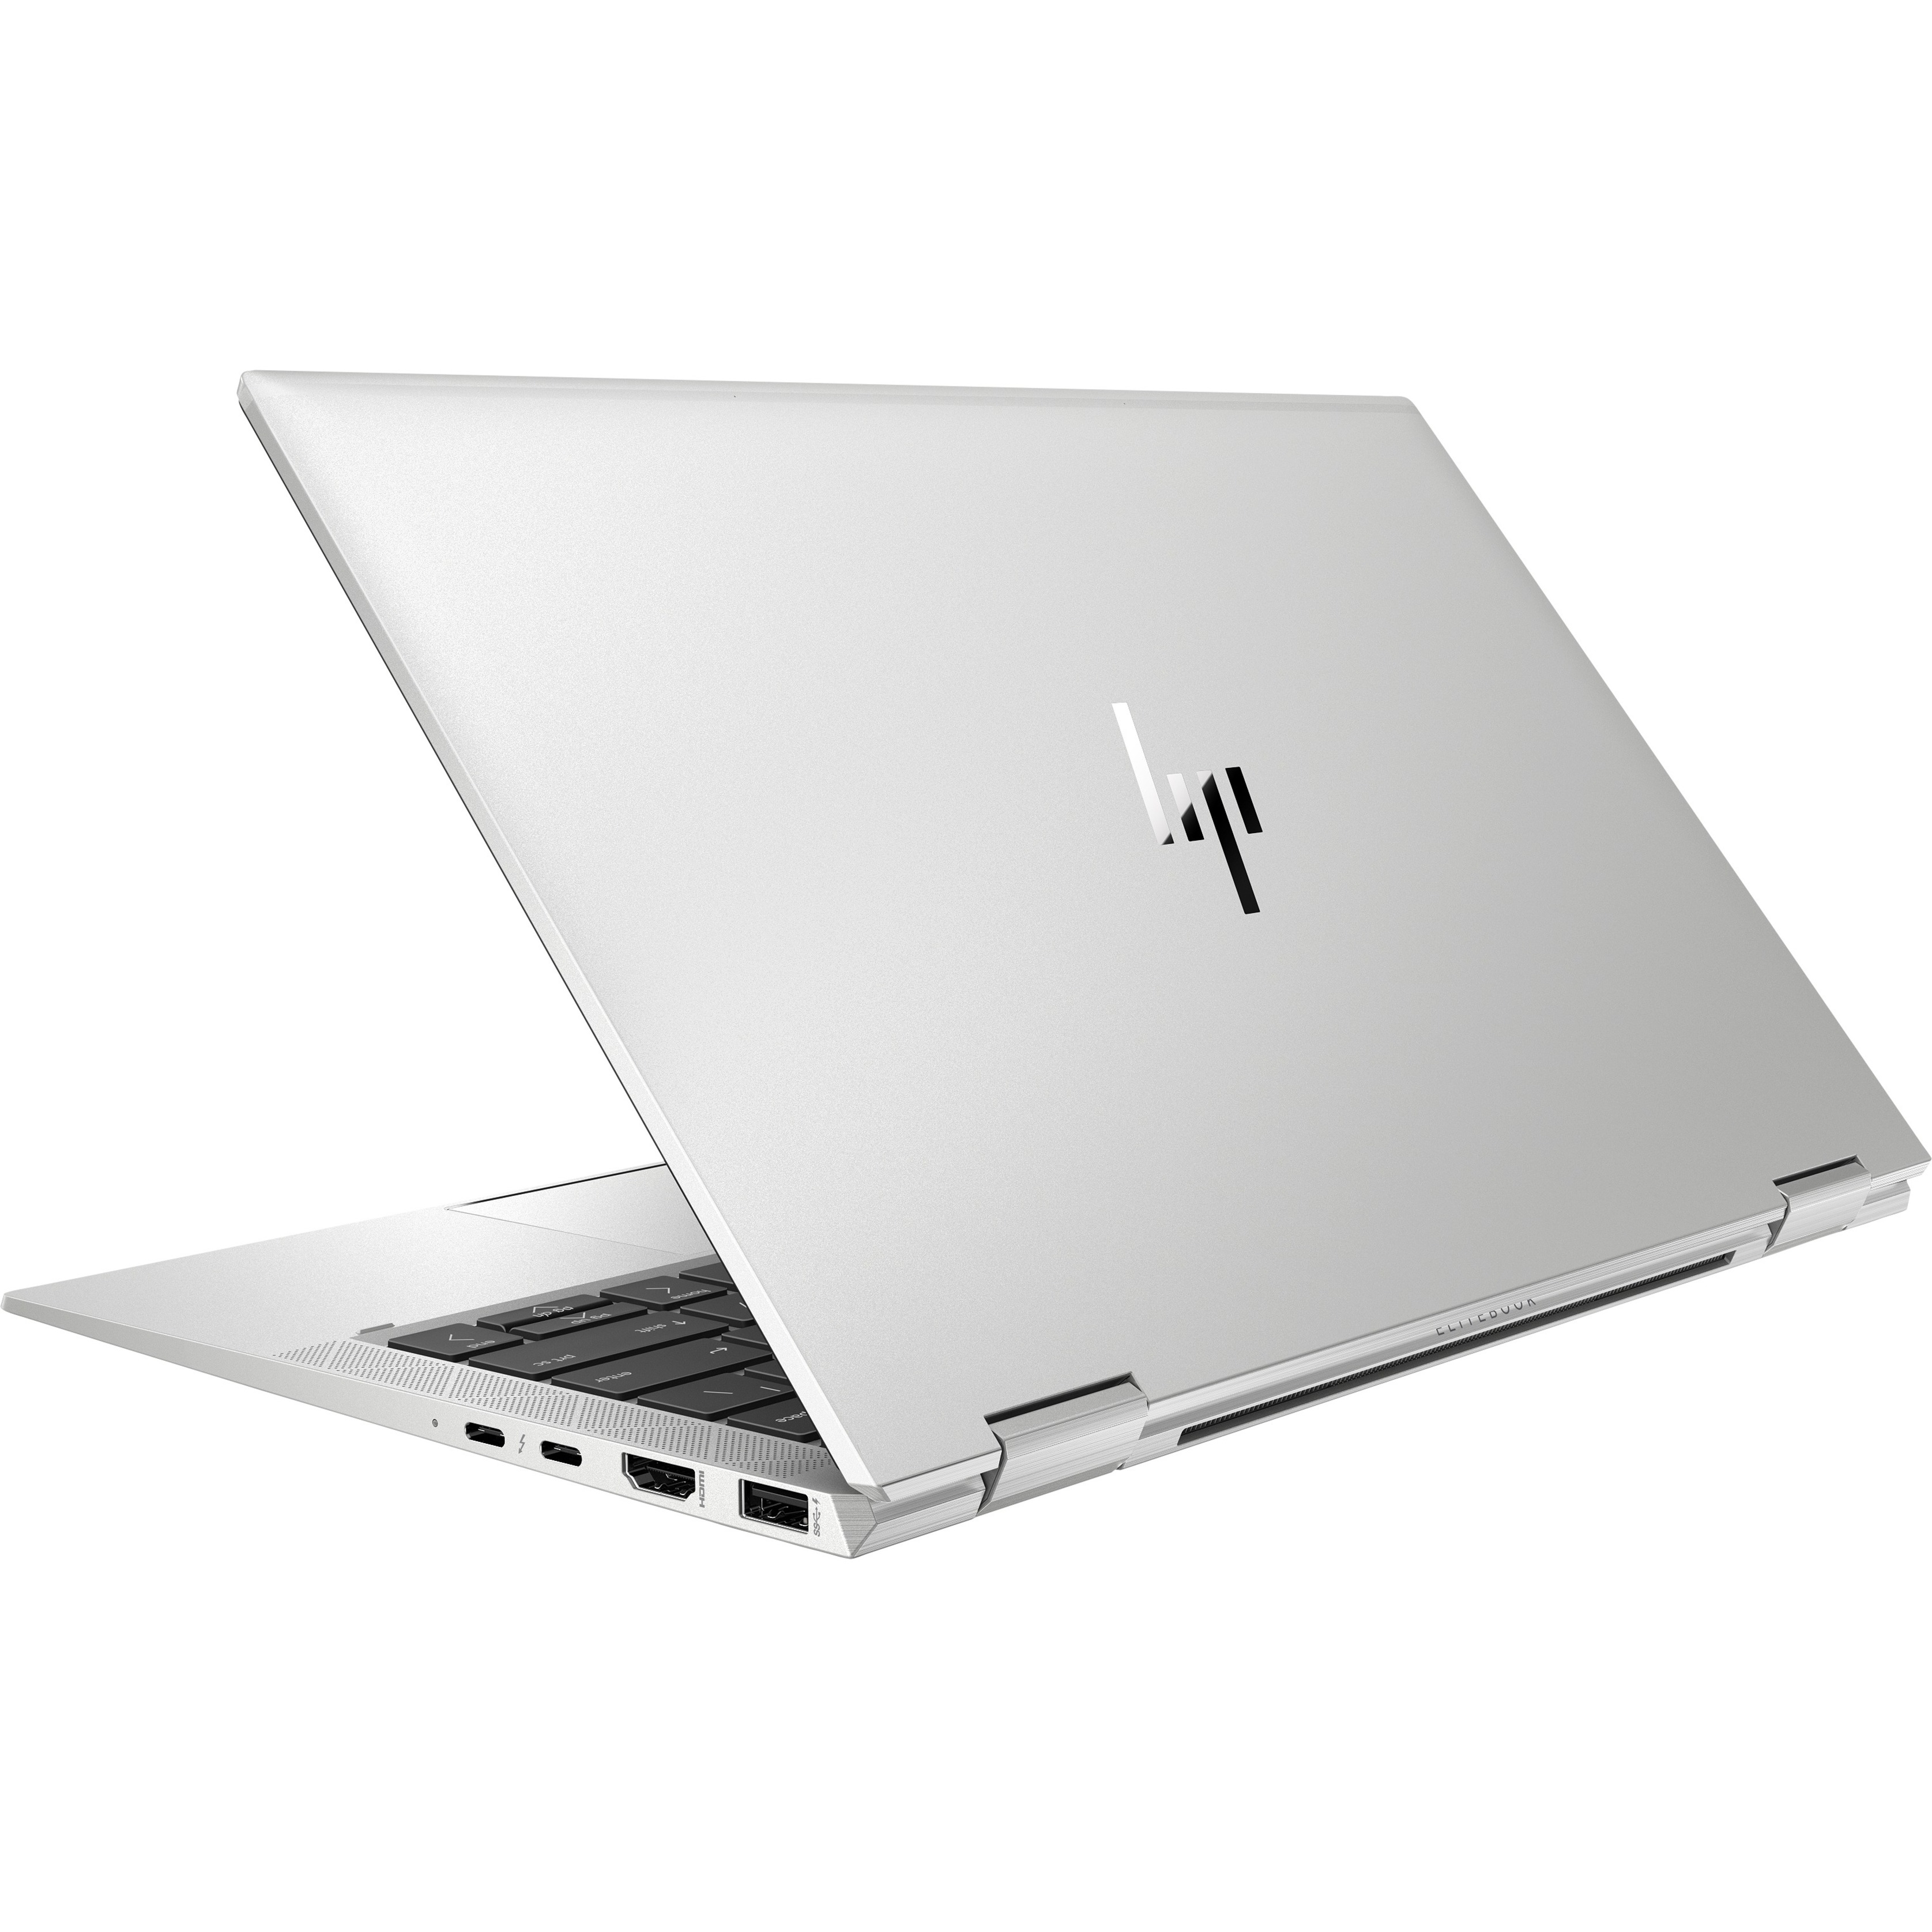 HP EliteBook x360 13.3" Full HD Touchscreen 2-in-1 Laptop, Intel Core i5 i5-10210U, 128GB SSD, Windows 10 Pro - image 5 of 8